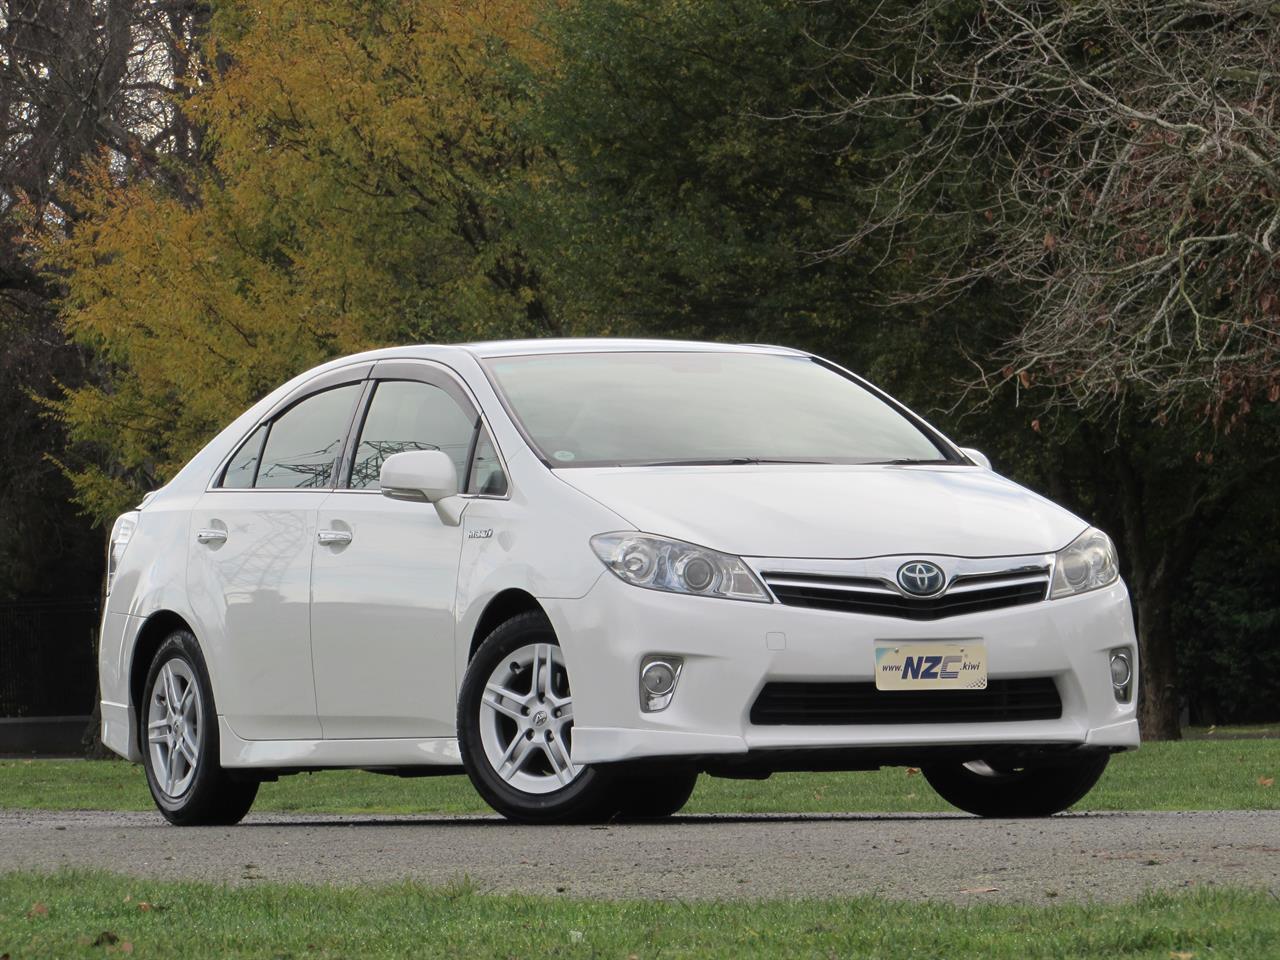 2011 Toyota SAI 2.4L Hybrid Cruise Control +Possible rebate of $851.79